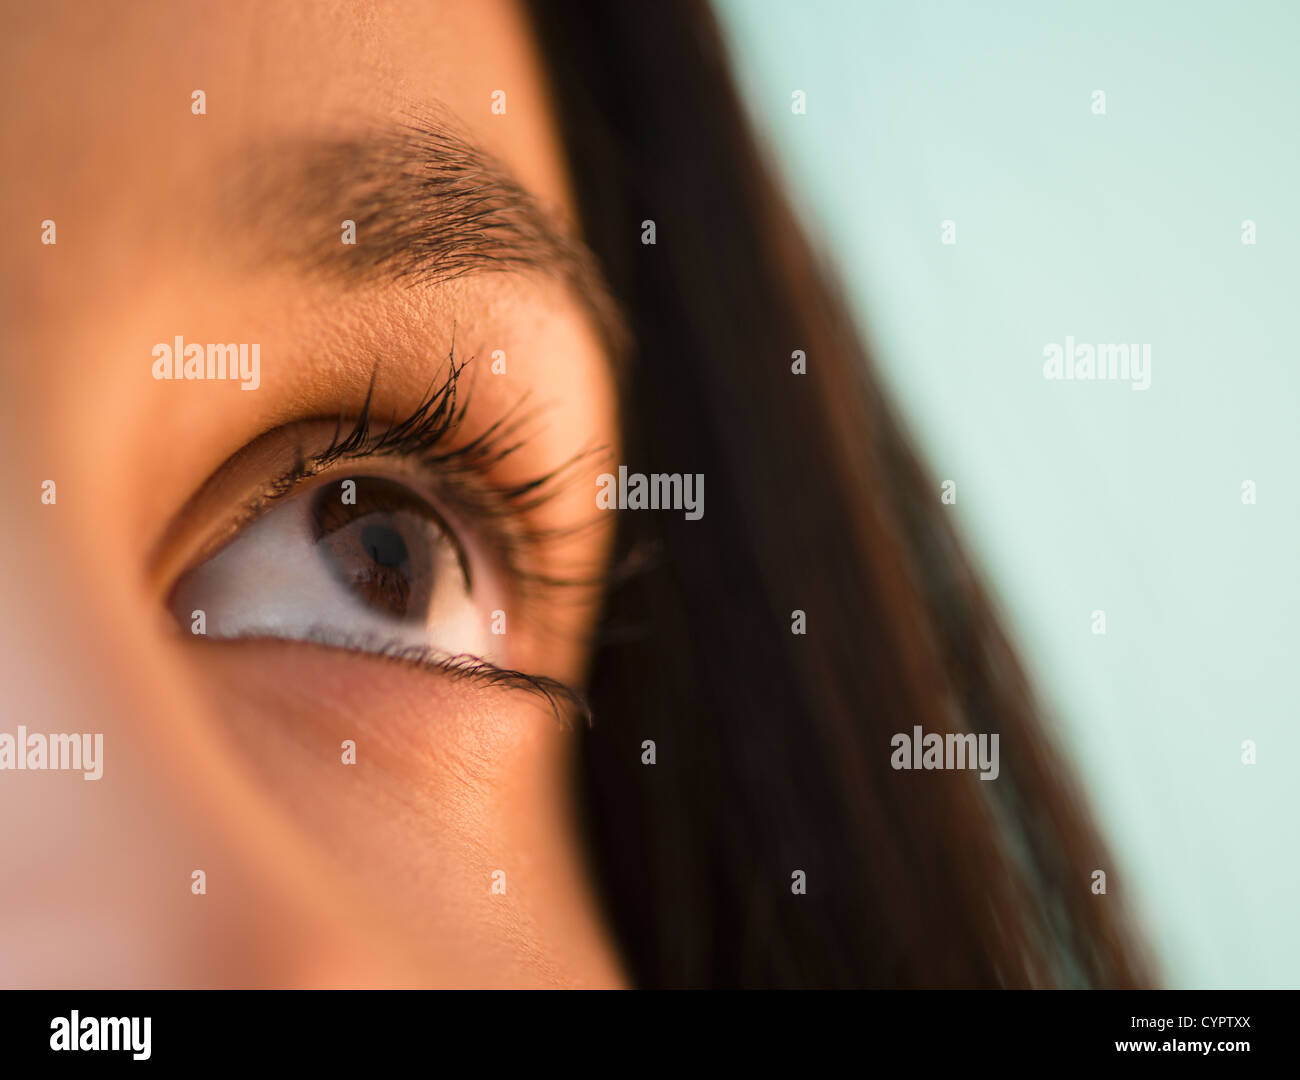 Close up of Hispanic teenager's eye Stock Photo